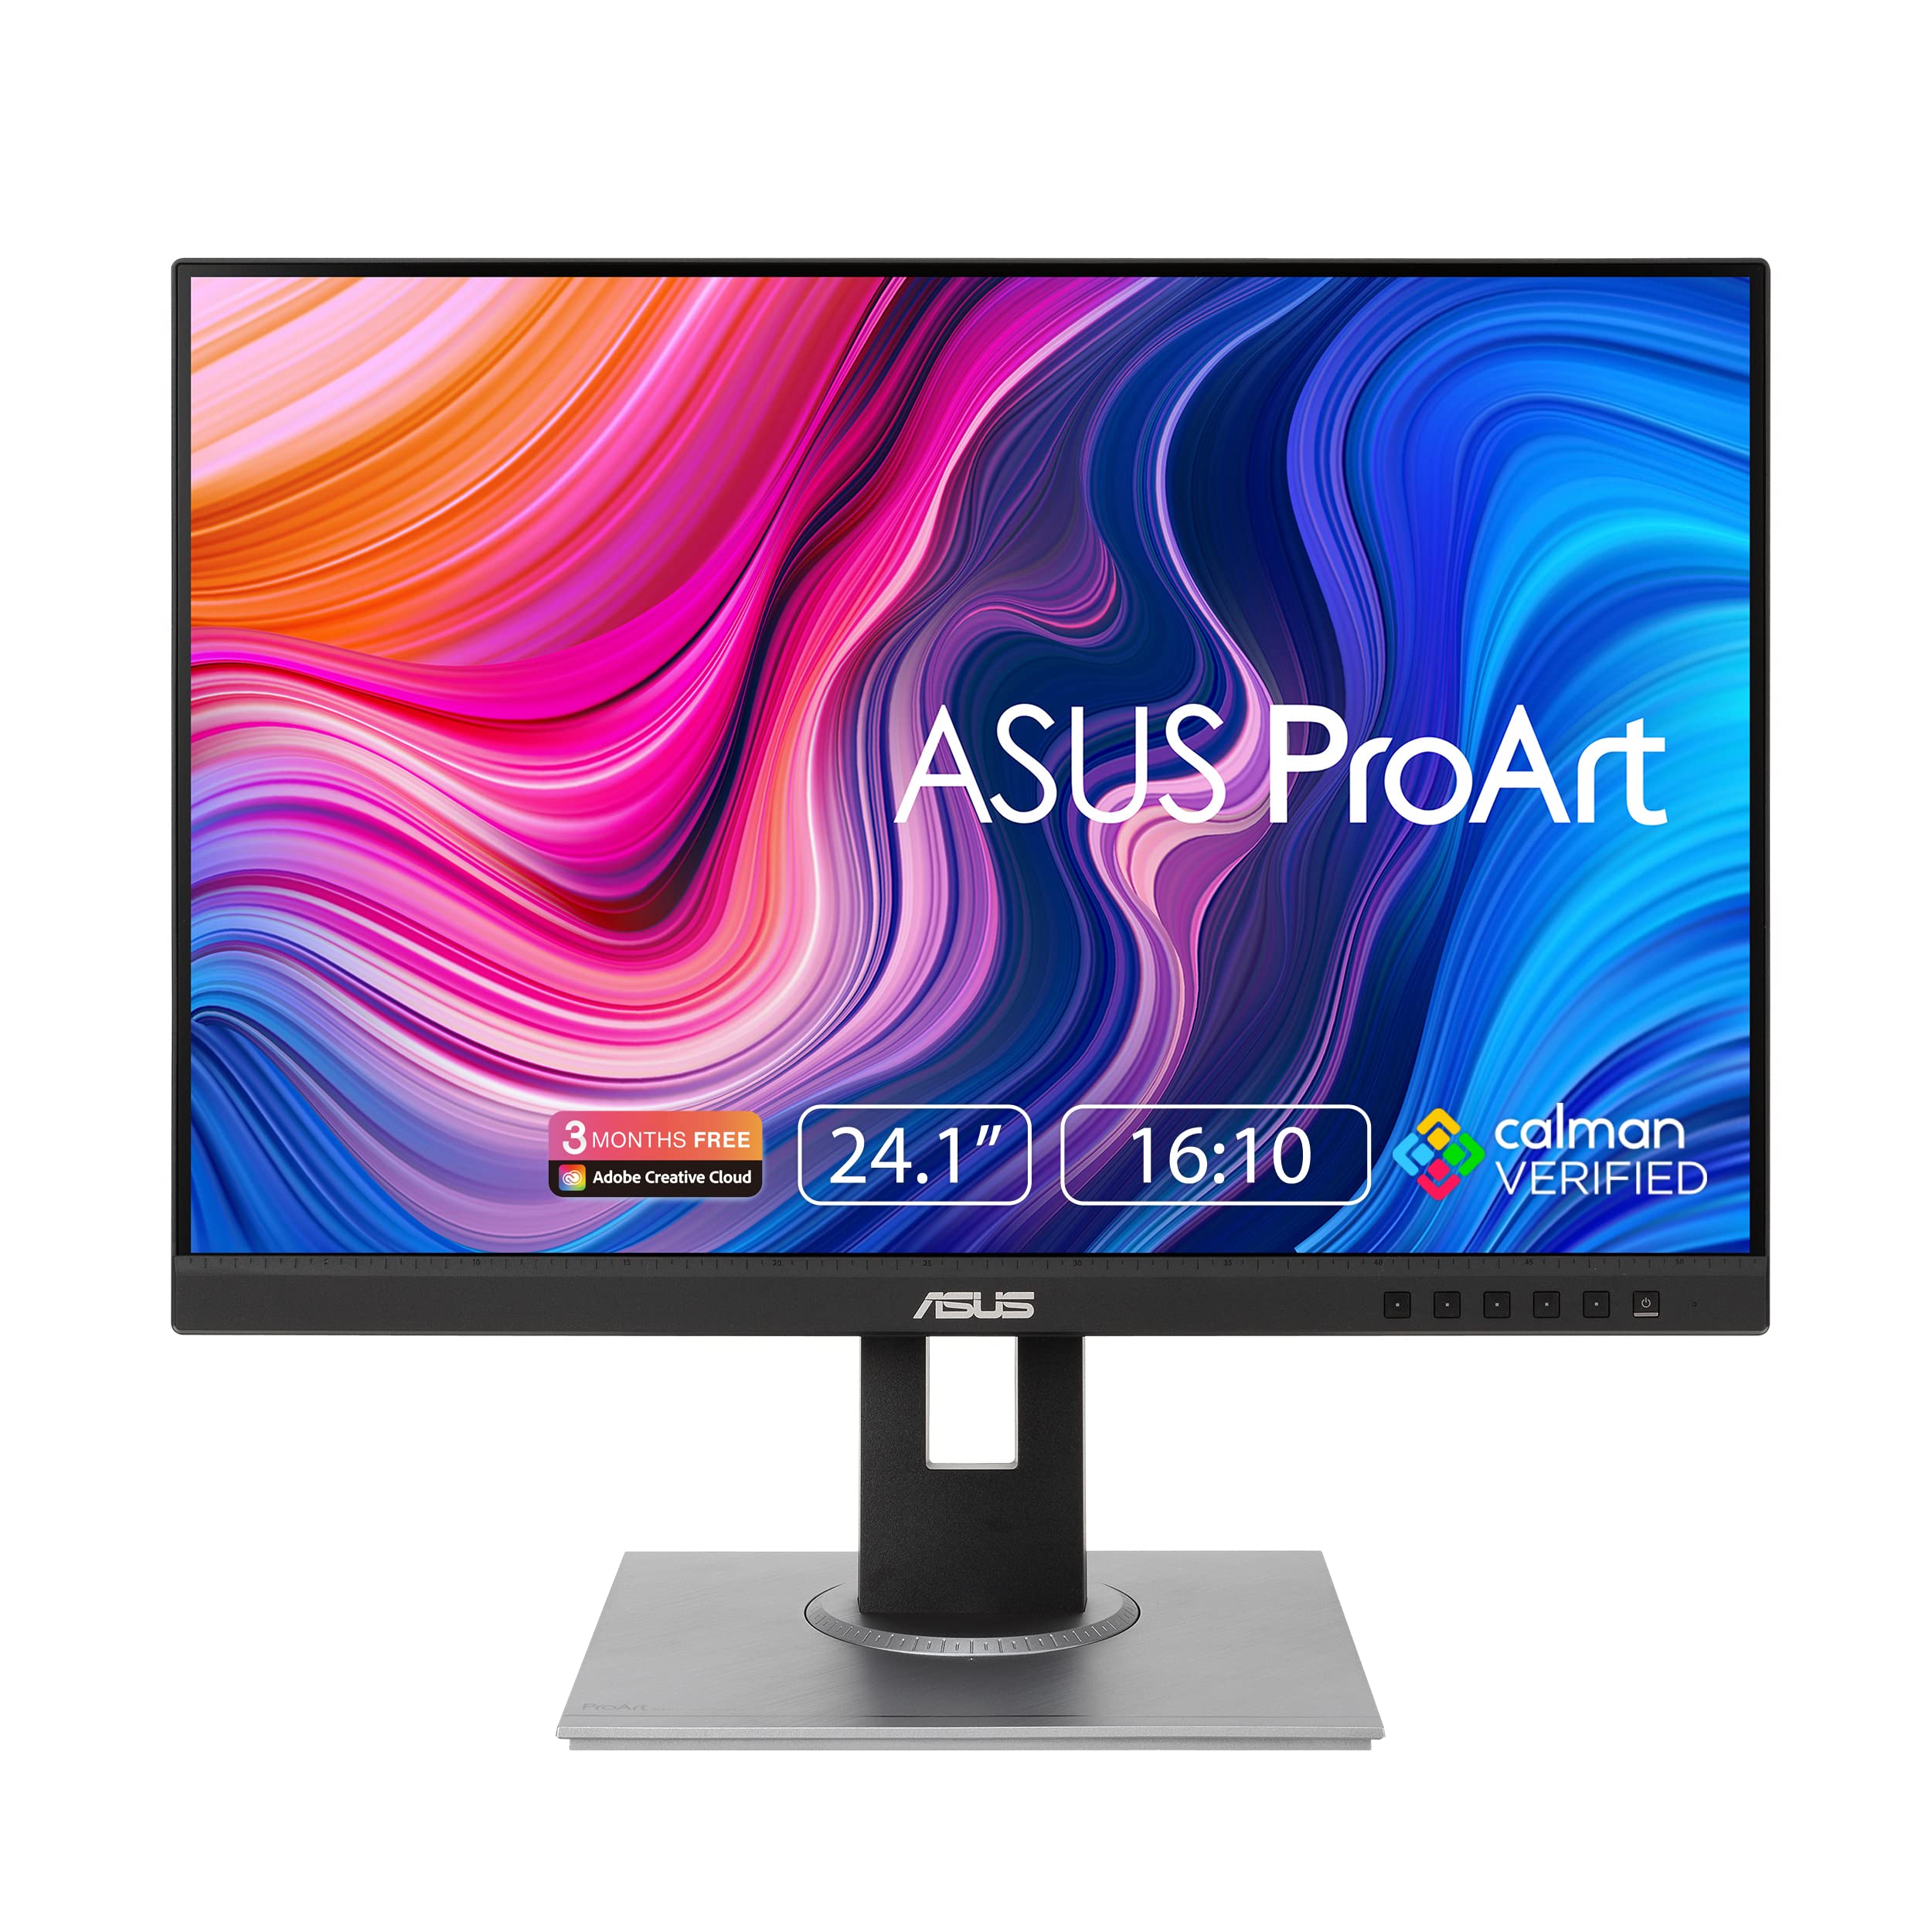 ASUS ProArt Display PA248QV 24.1” WUXGA (1920 x 1200) 16:10 Monitor, 100% sRGB/Rec.709 ΔE  2, IPS, DisplayPort HDMI D-Sub, Calman Verified, Anti-glare, Tilt Pivot Swivel Height Adjustable, Black